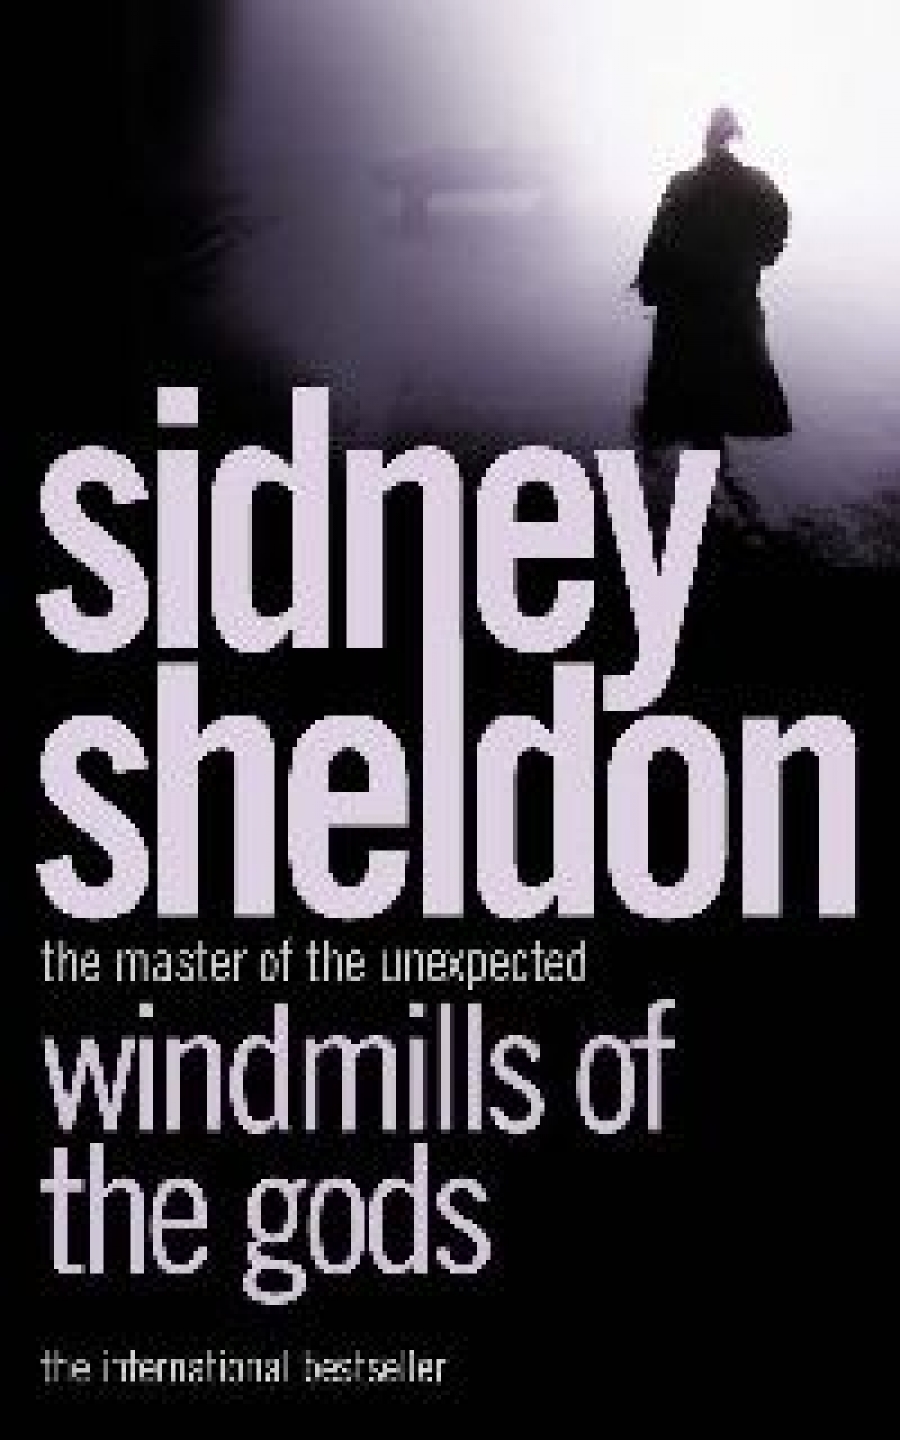 Sheldon Sidney Windmills of the Gods 